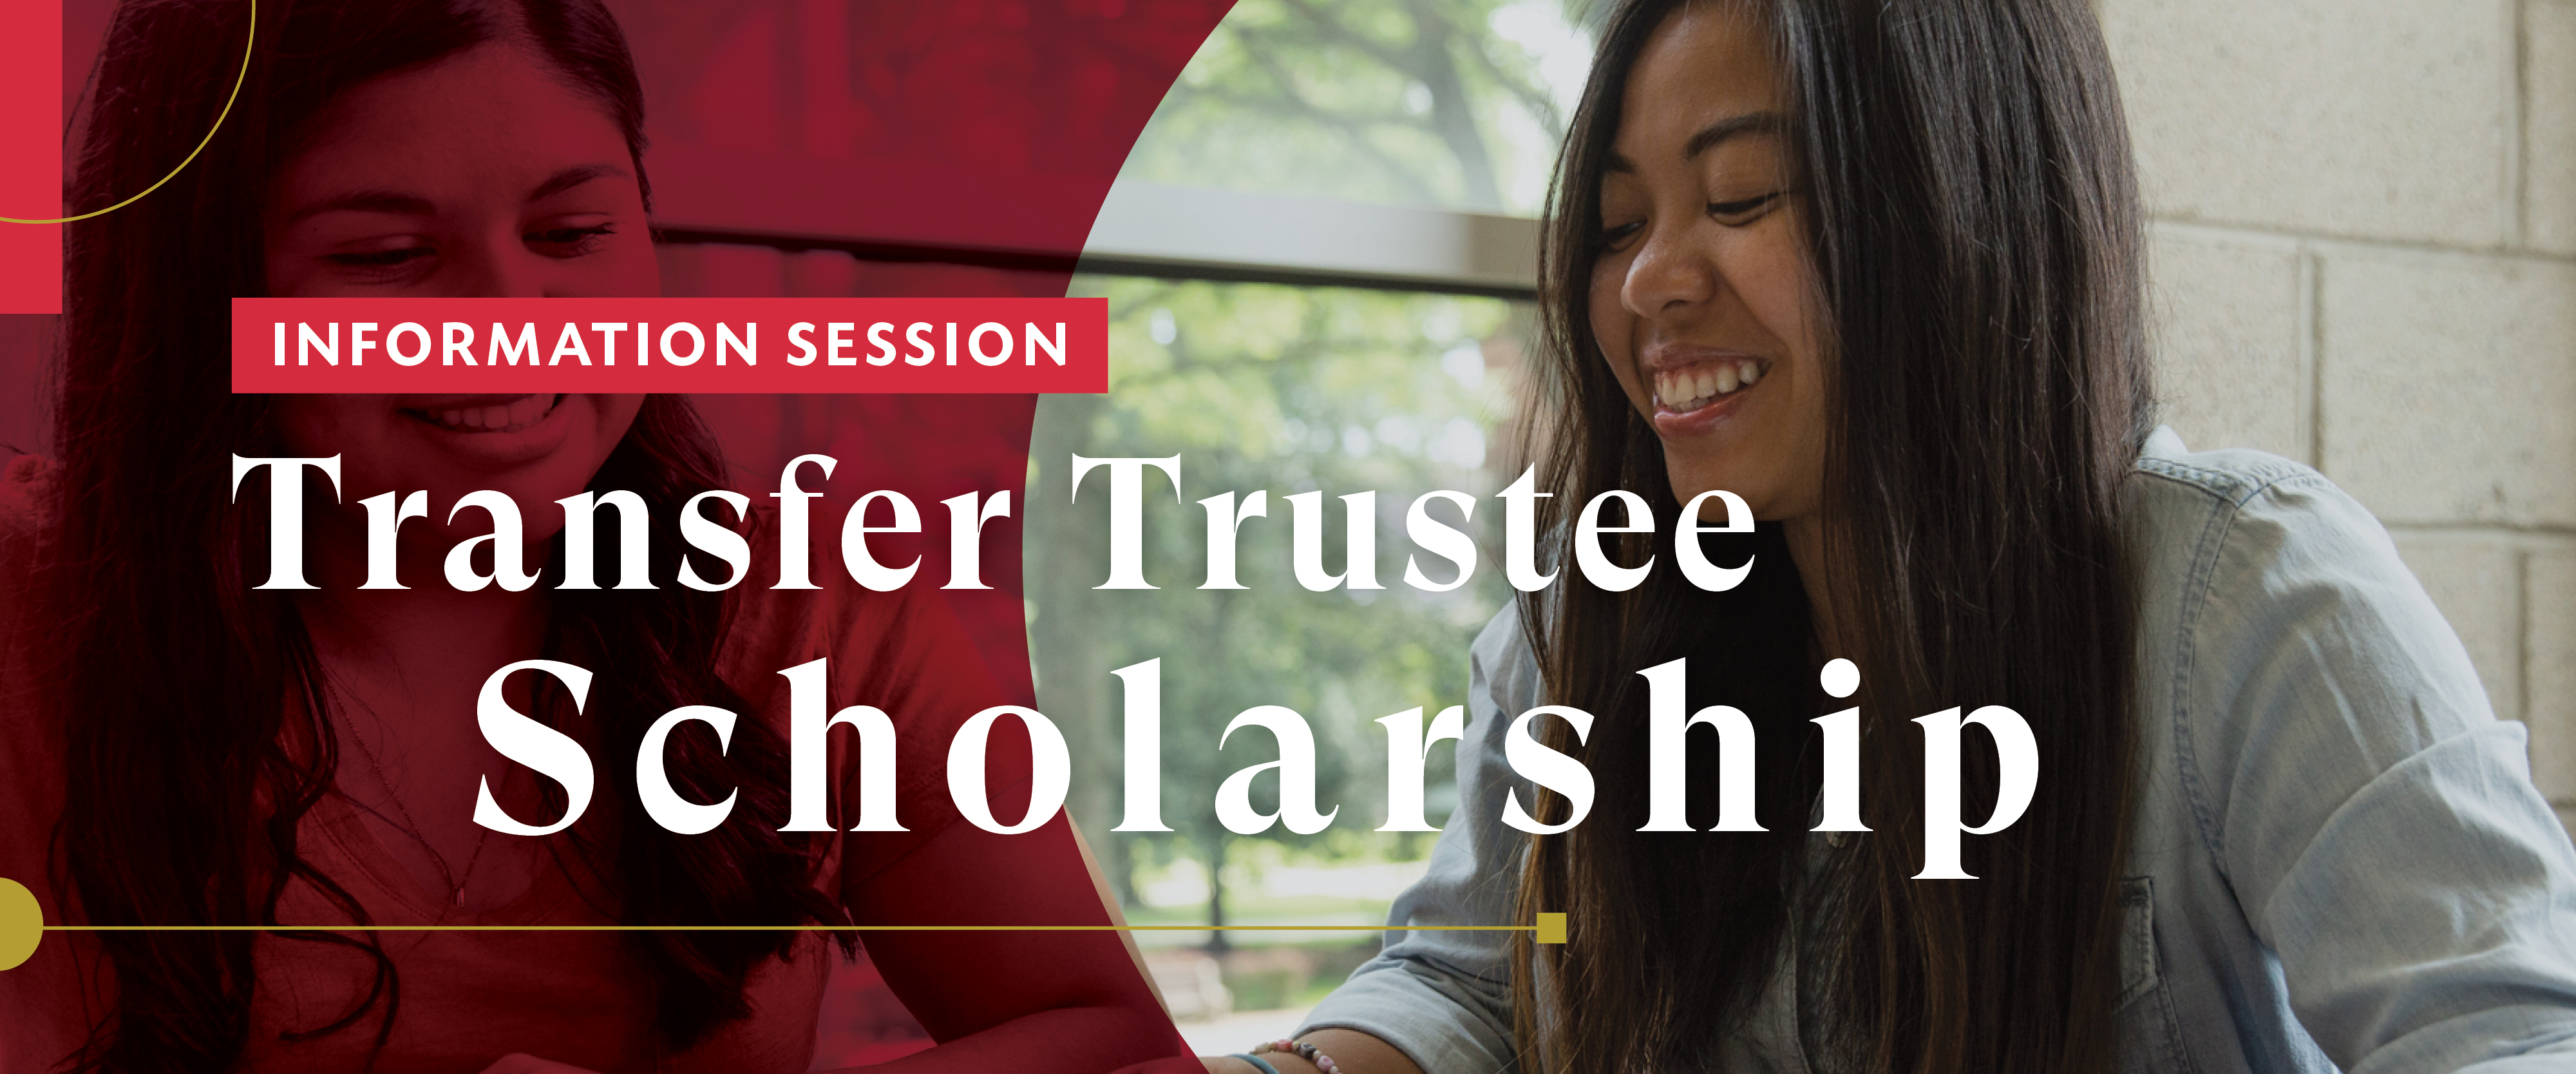 Transfer Trustee Scholarship Information Session